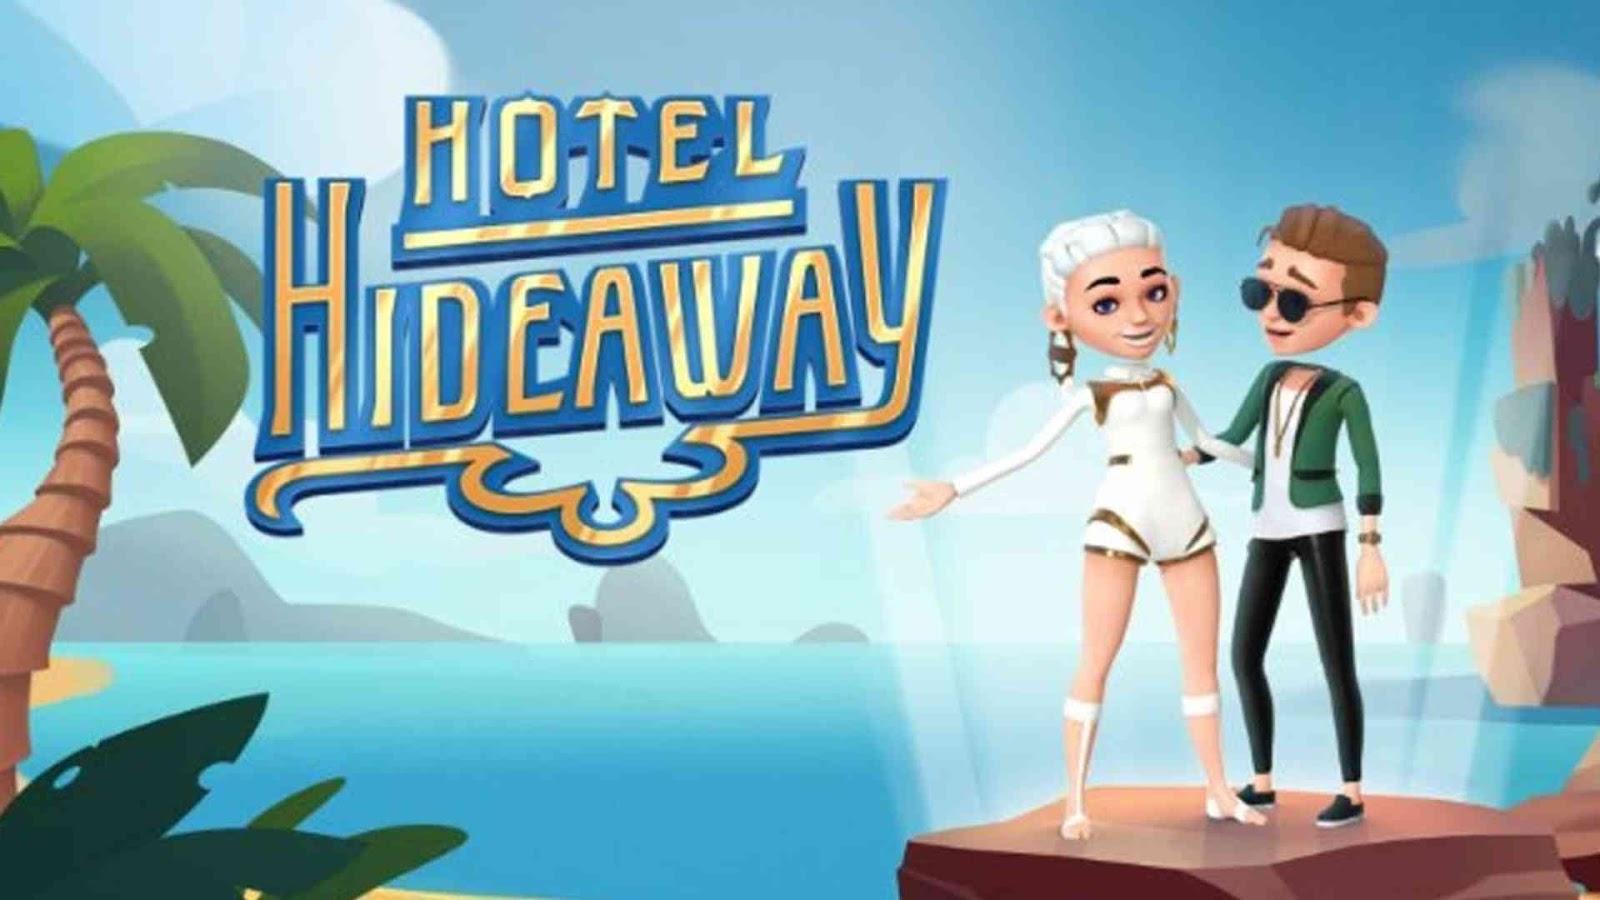 Hotel Hideaway: Virtual World